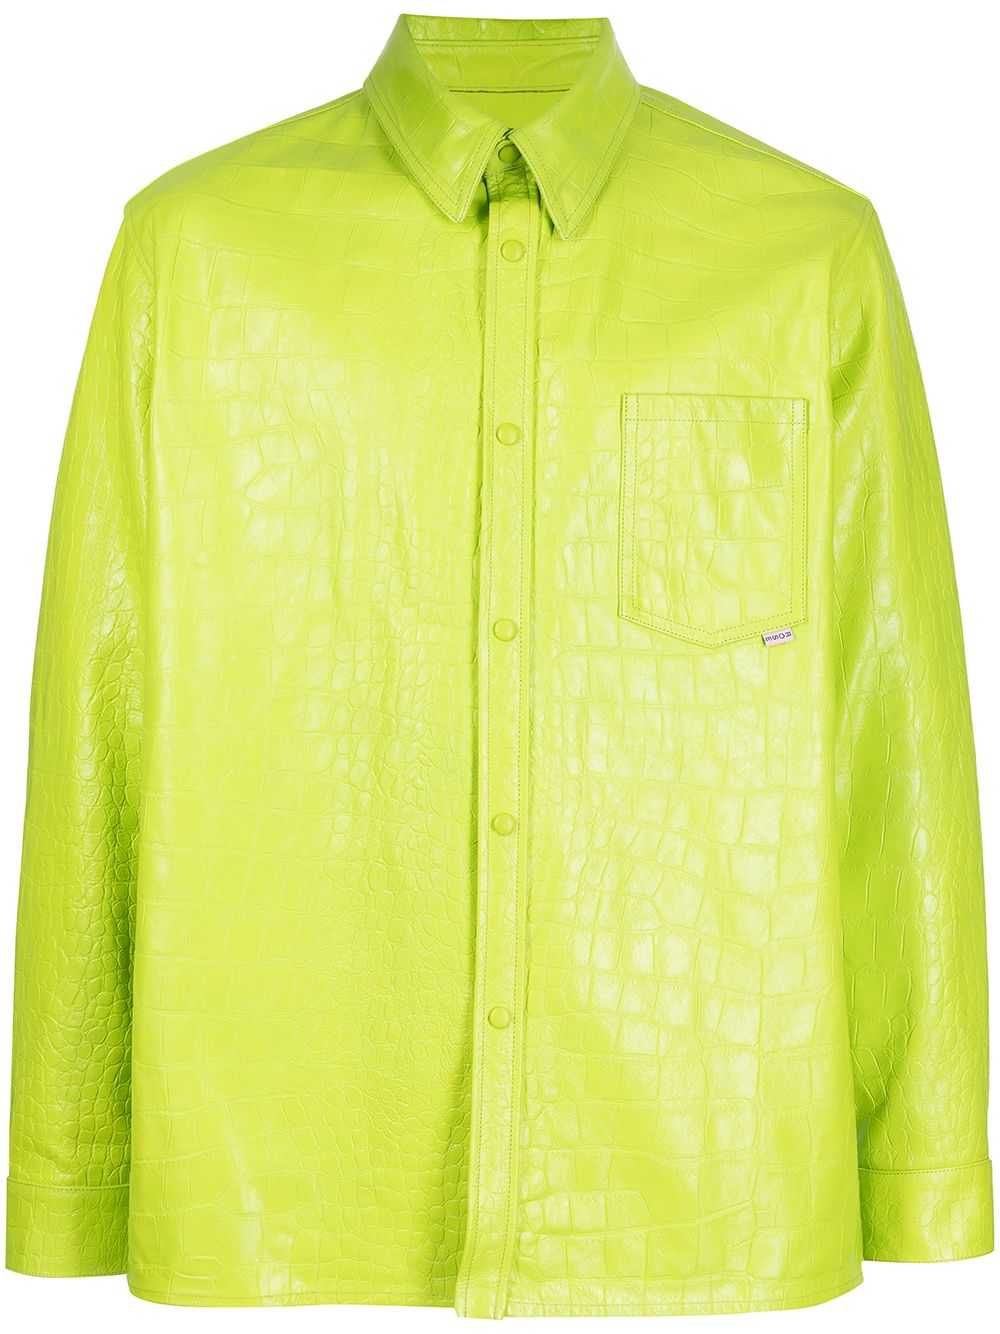 фото Martine rose куртка-рубашка с тиснением под крокодила